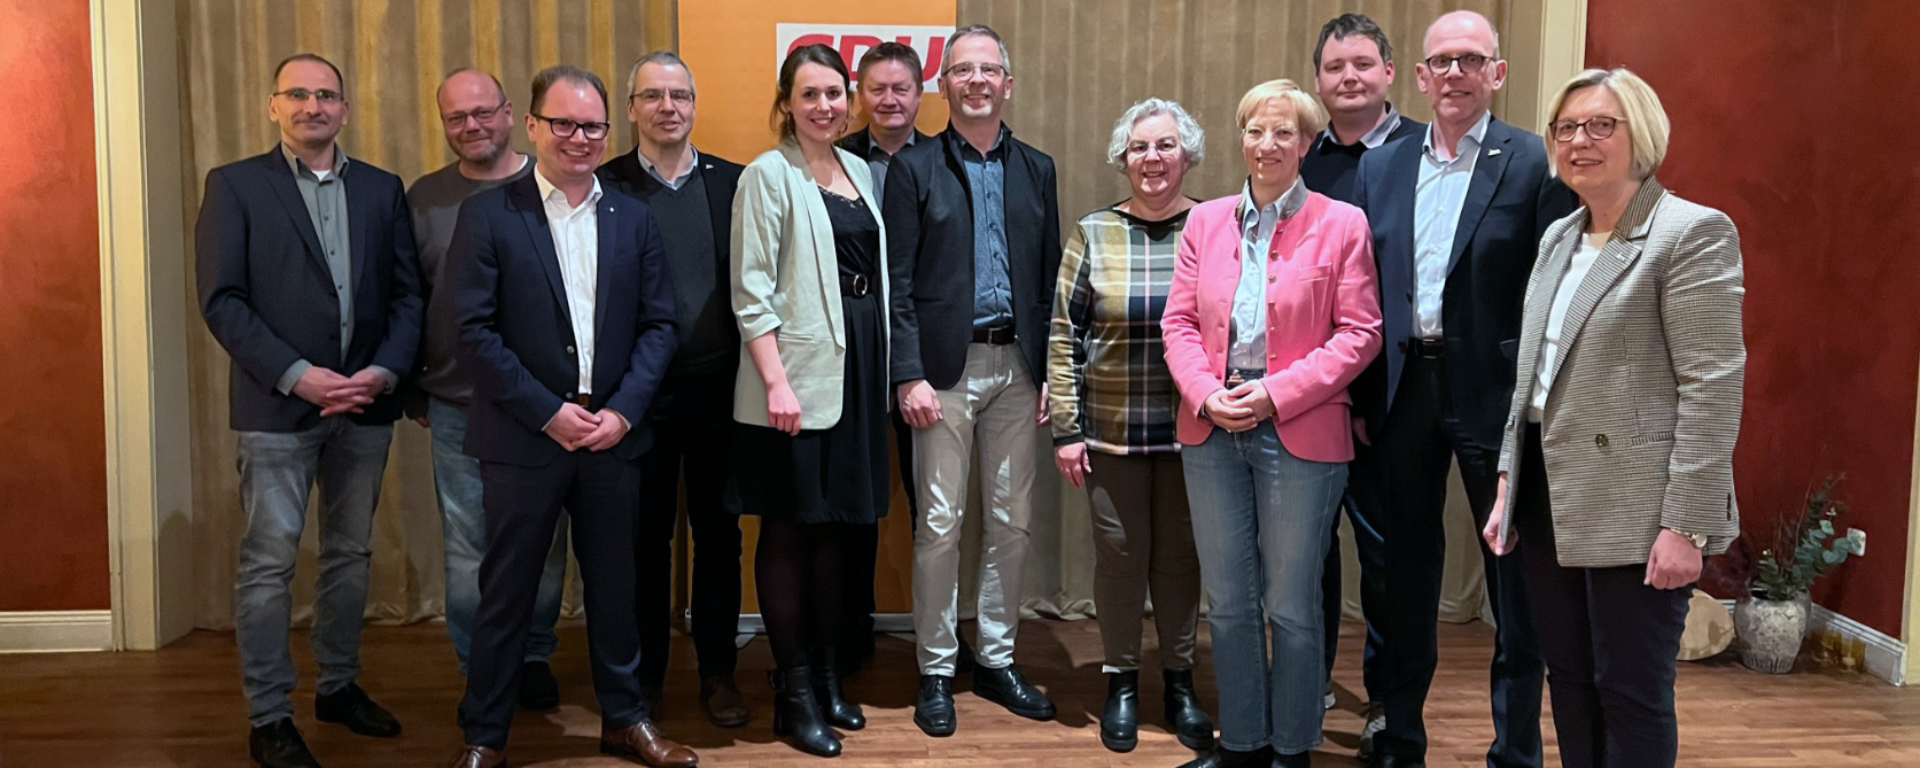 CDU-Stadtverband Delbrück - Mitgliederverssammlung